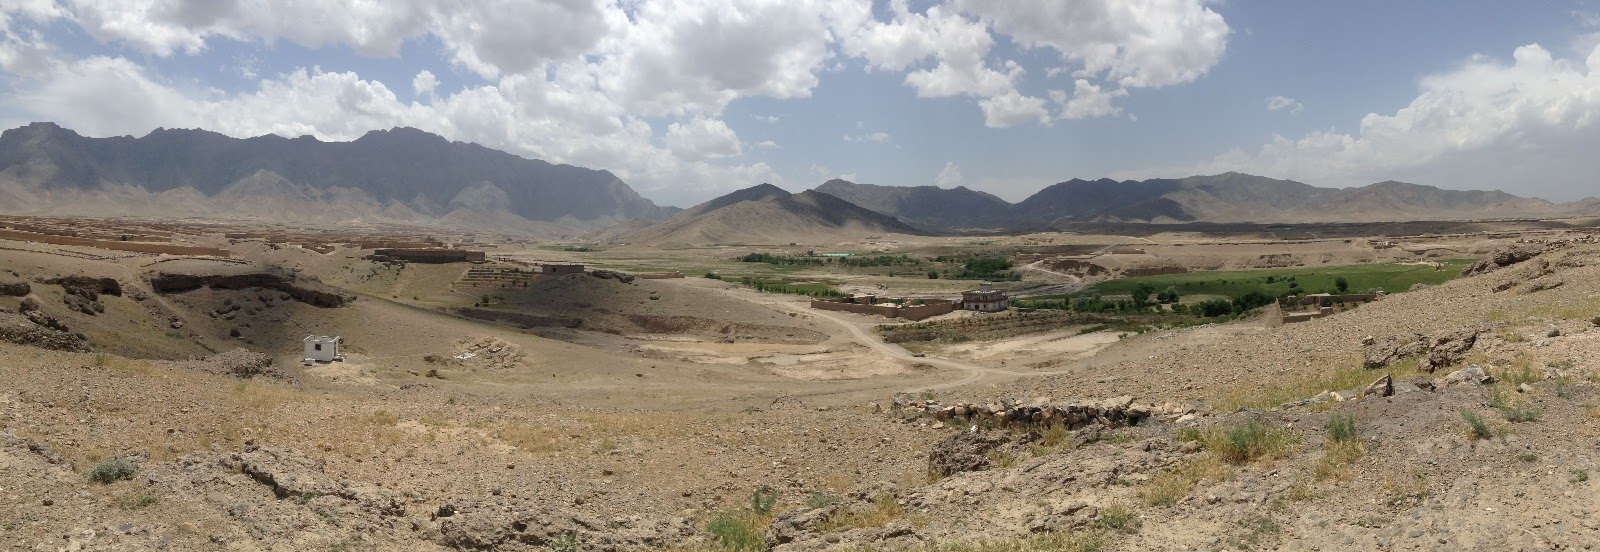 afghanistan panorama